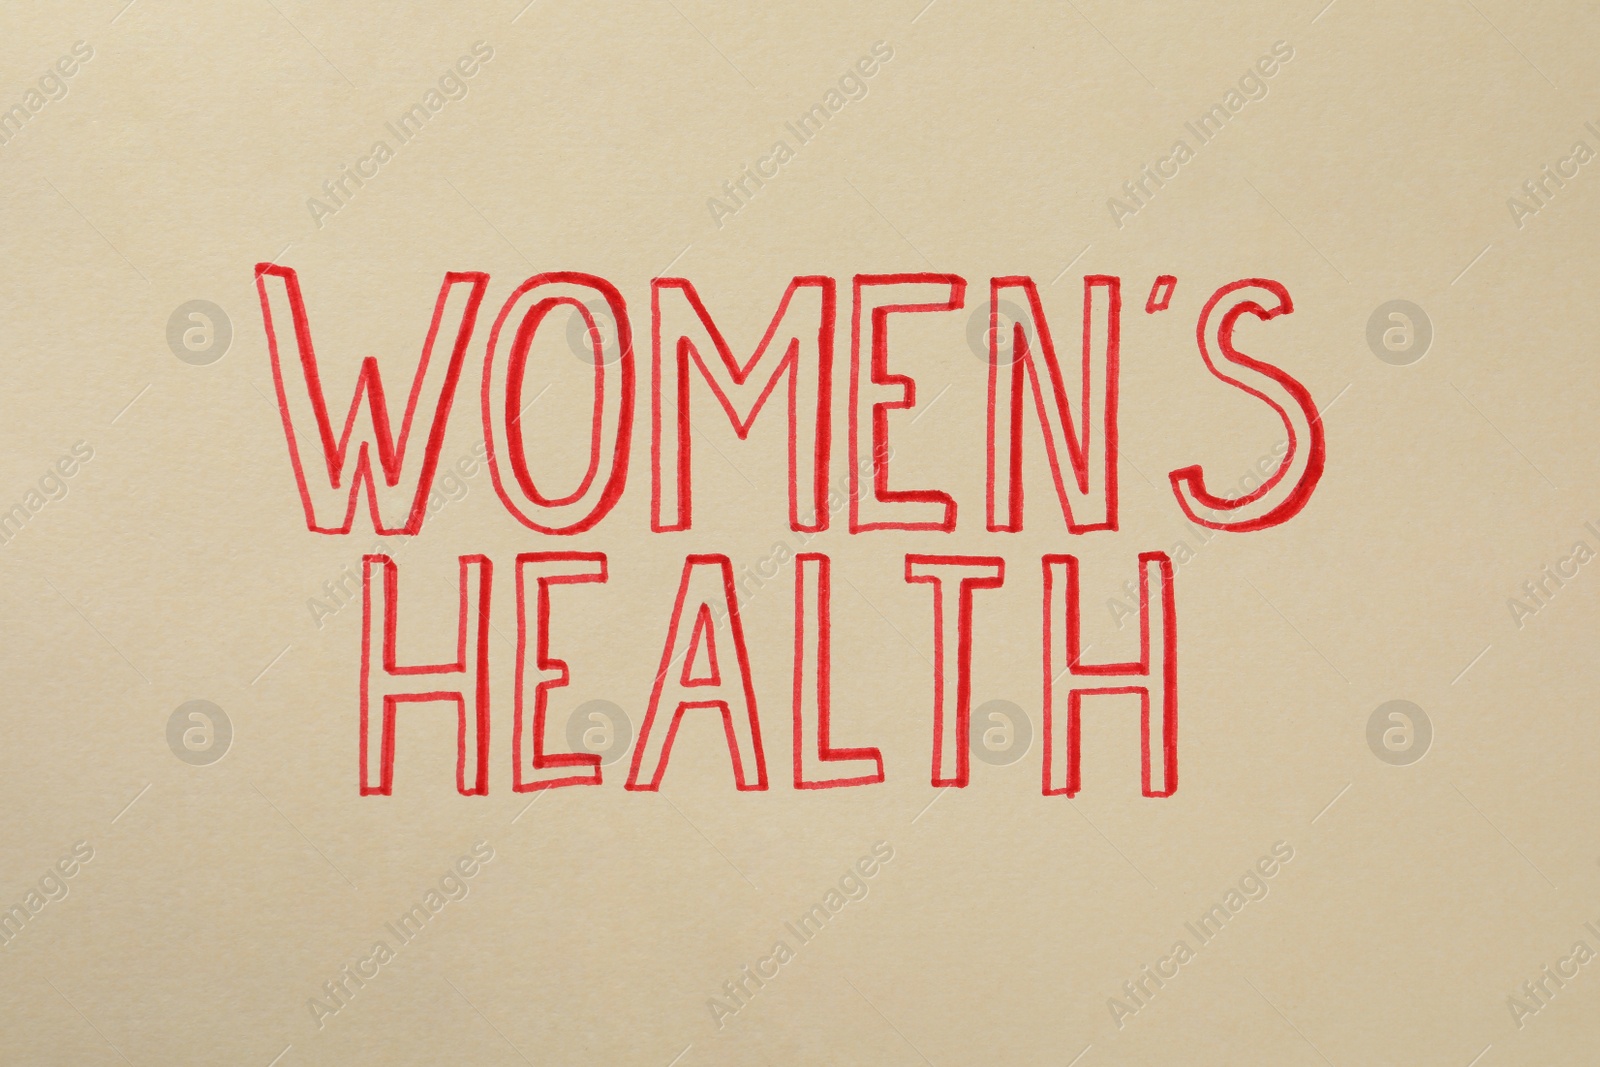 Photo of Words Women's Health written on beige background, top view